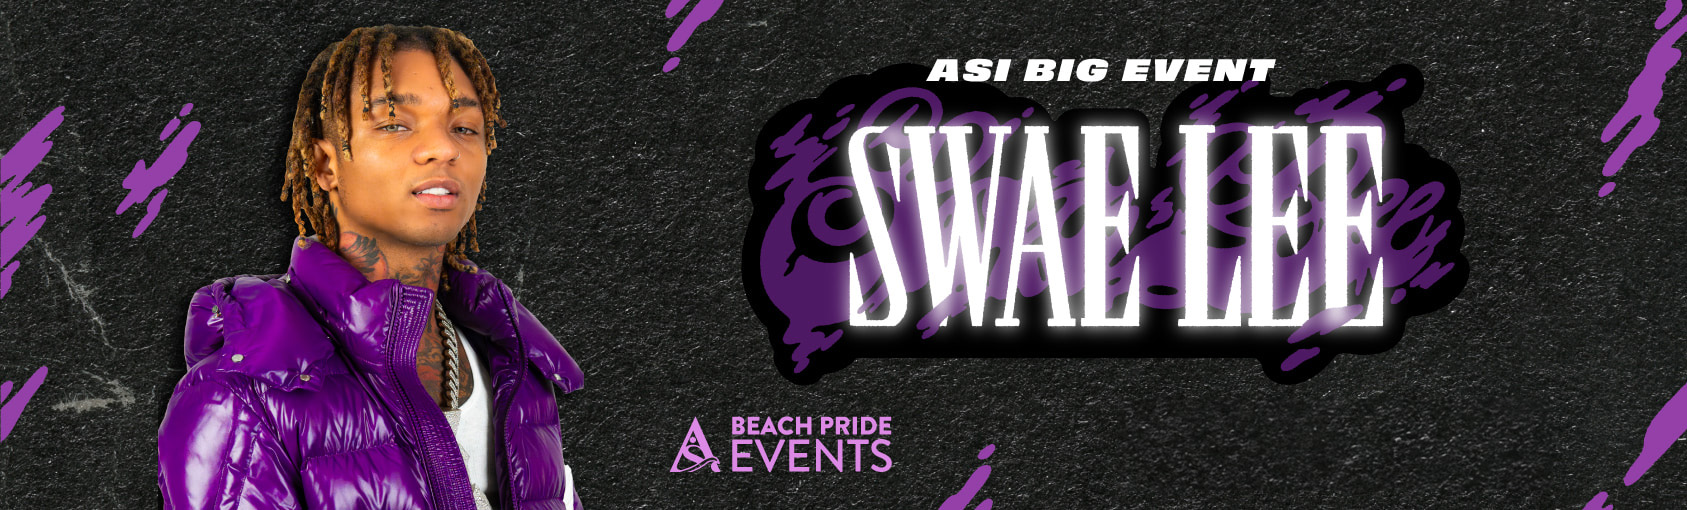 Swae Lee Big Event